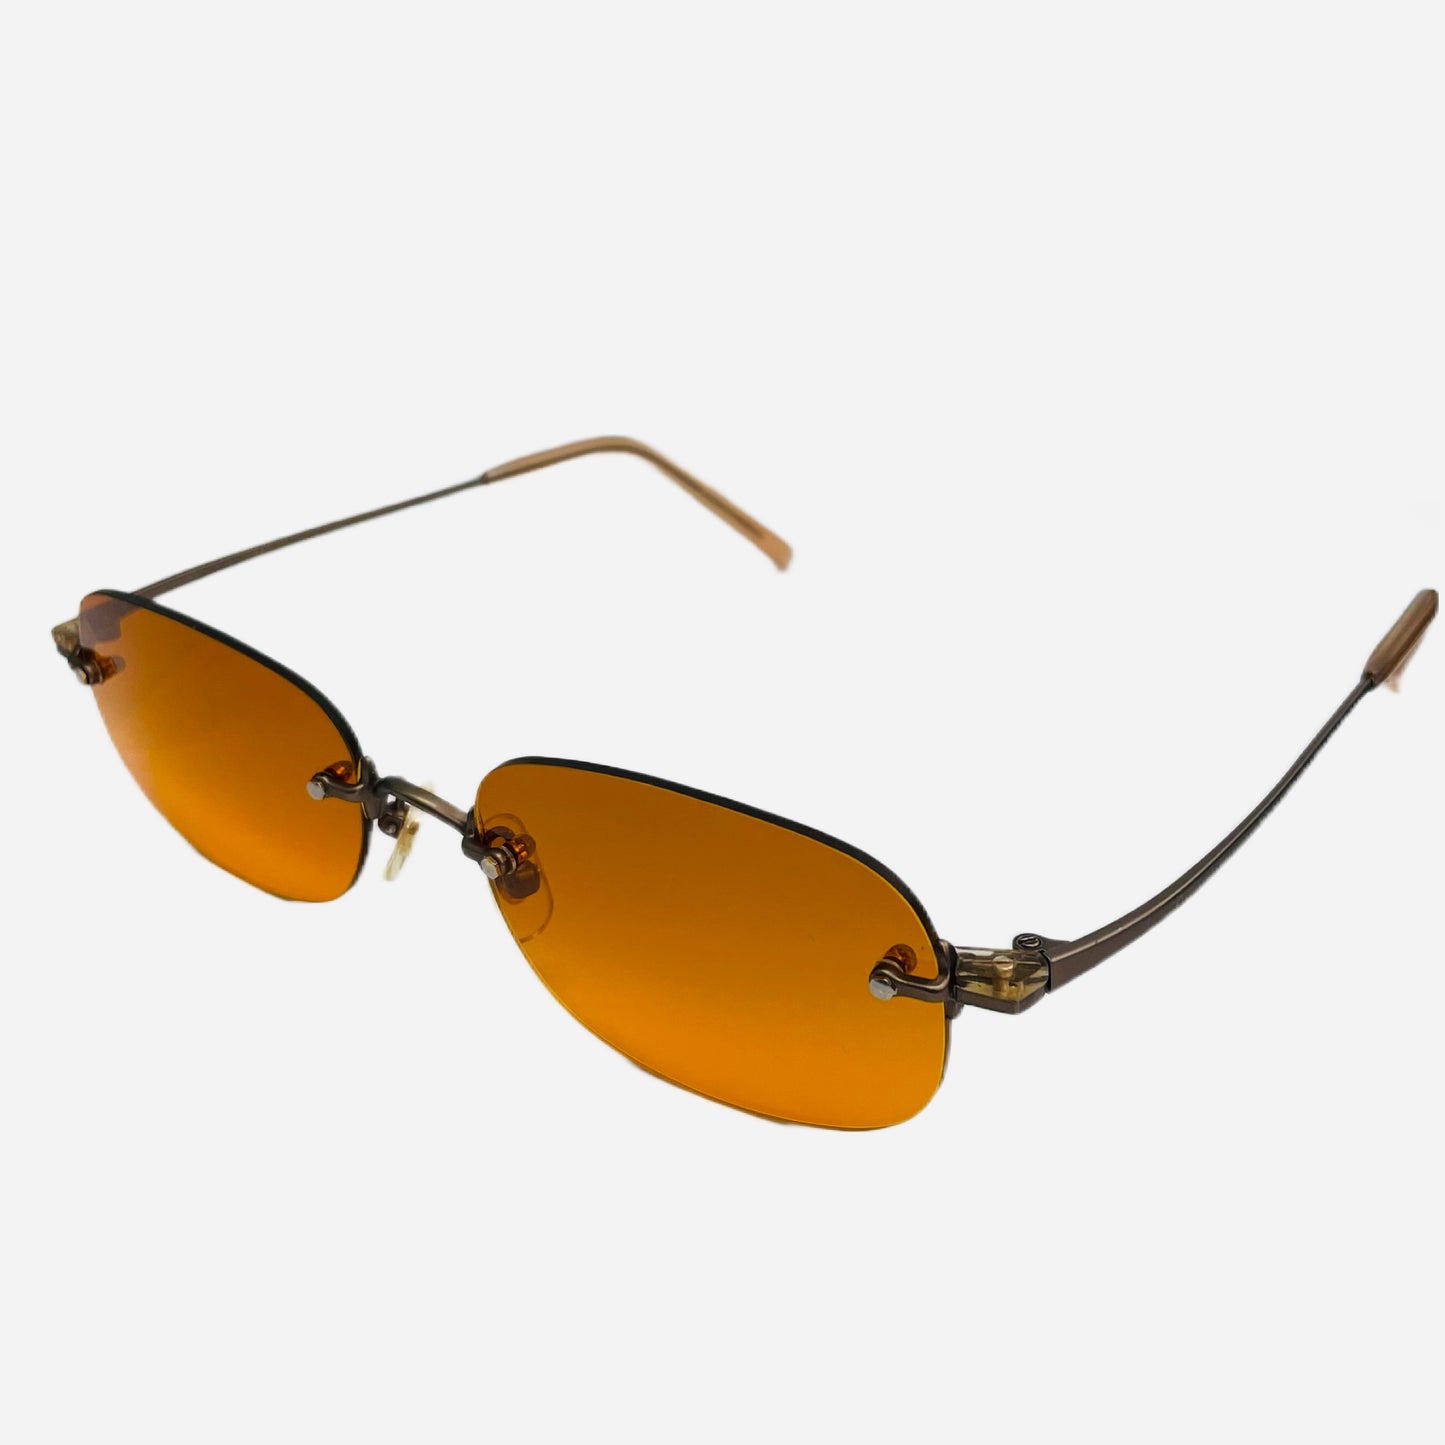 Vintage-Matsuda-Sonnenbrille-Sunglasses-rimless-rahmenlos-Custom-the-seekers-oben